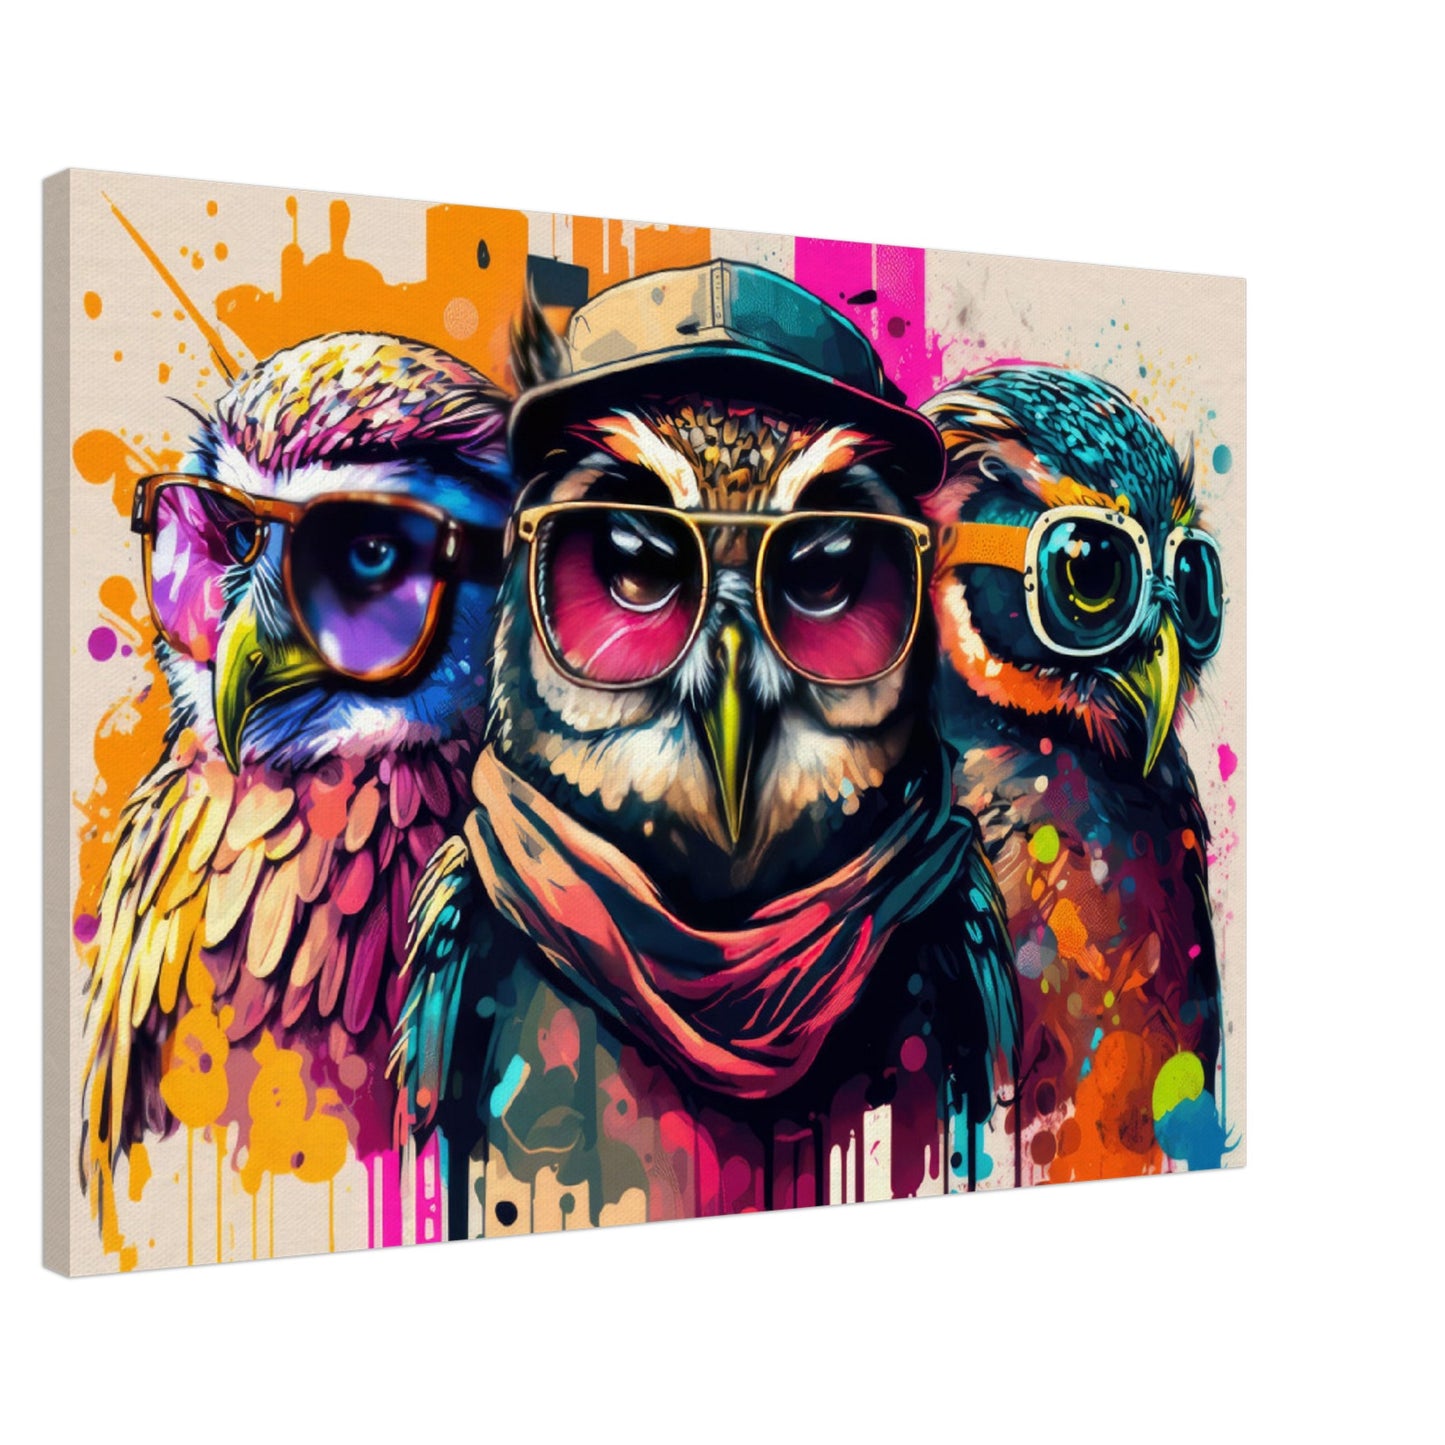 Vibrant Vivarium - Eulen Wandbild - Crazy Wildlife Leinwand ColorWorld im Querformat - Coole Tiere & Animals Kunstdruck